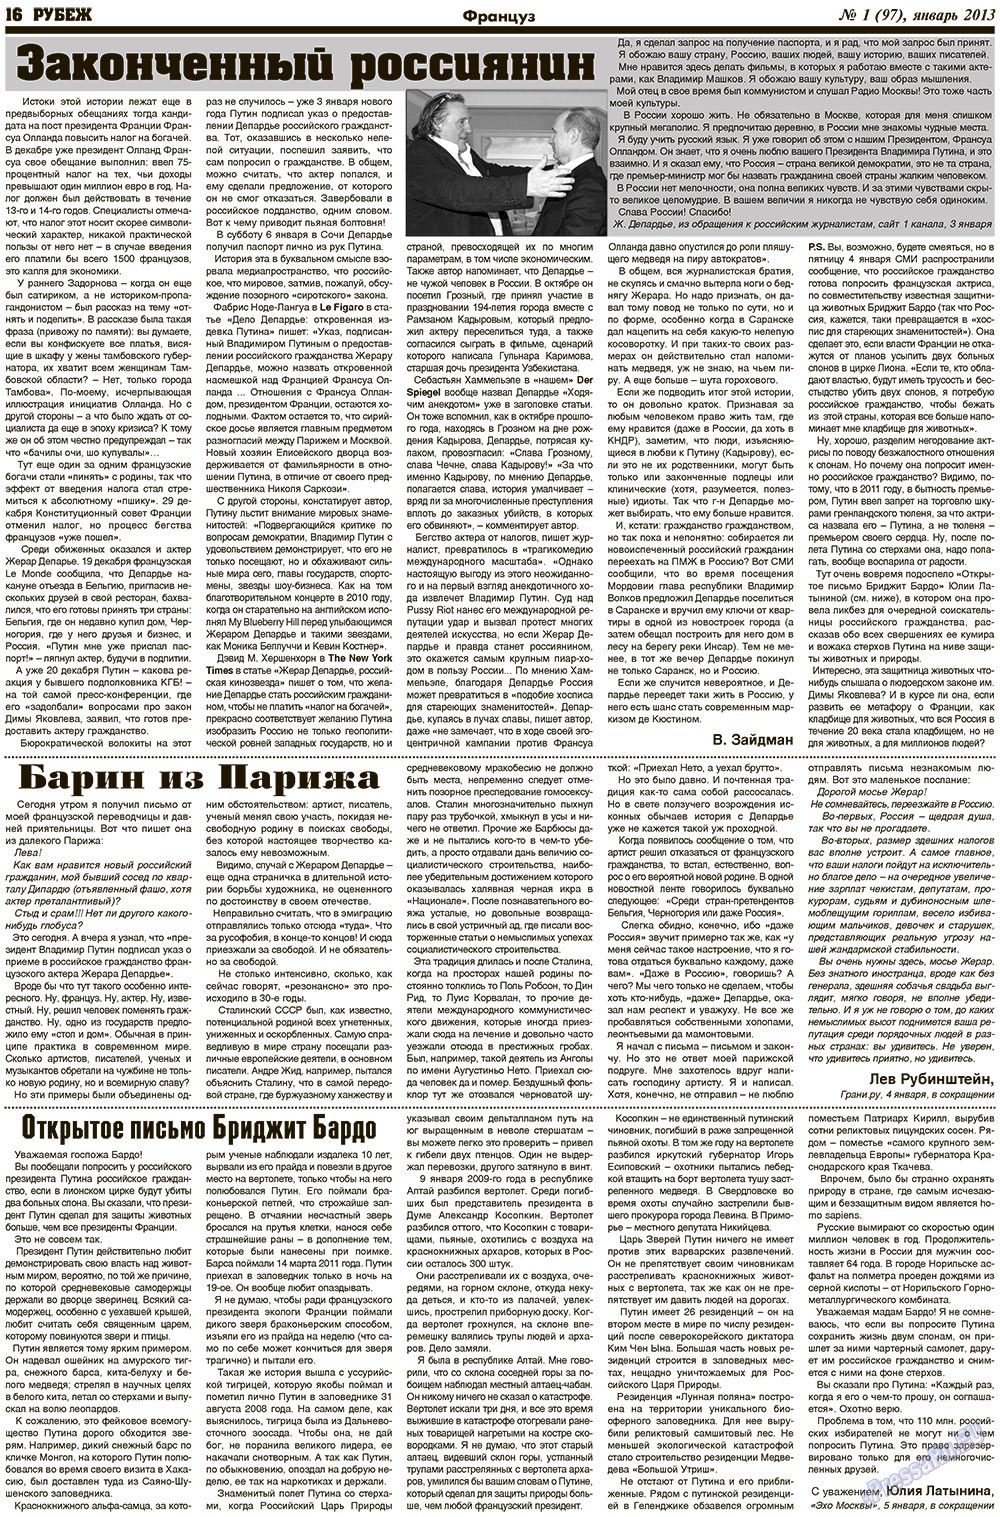 Рубеж, газета. 2013 №1 стр.16